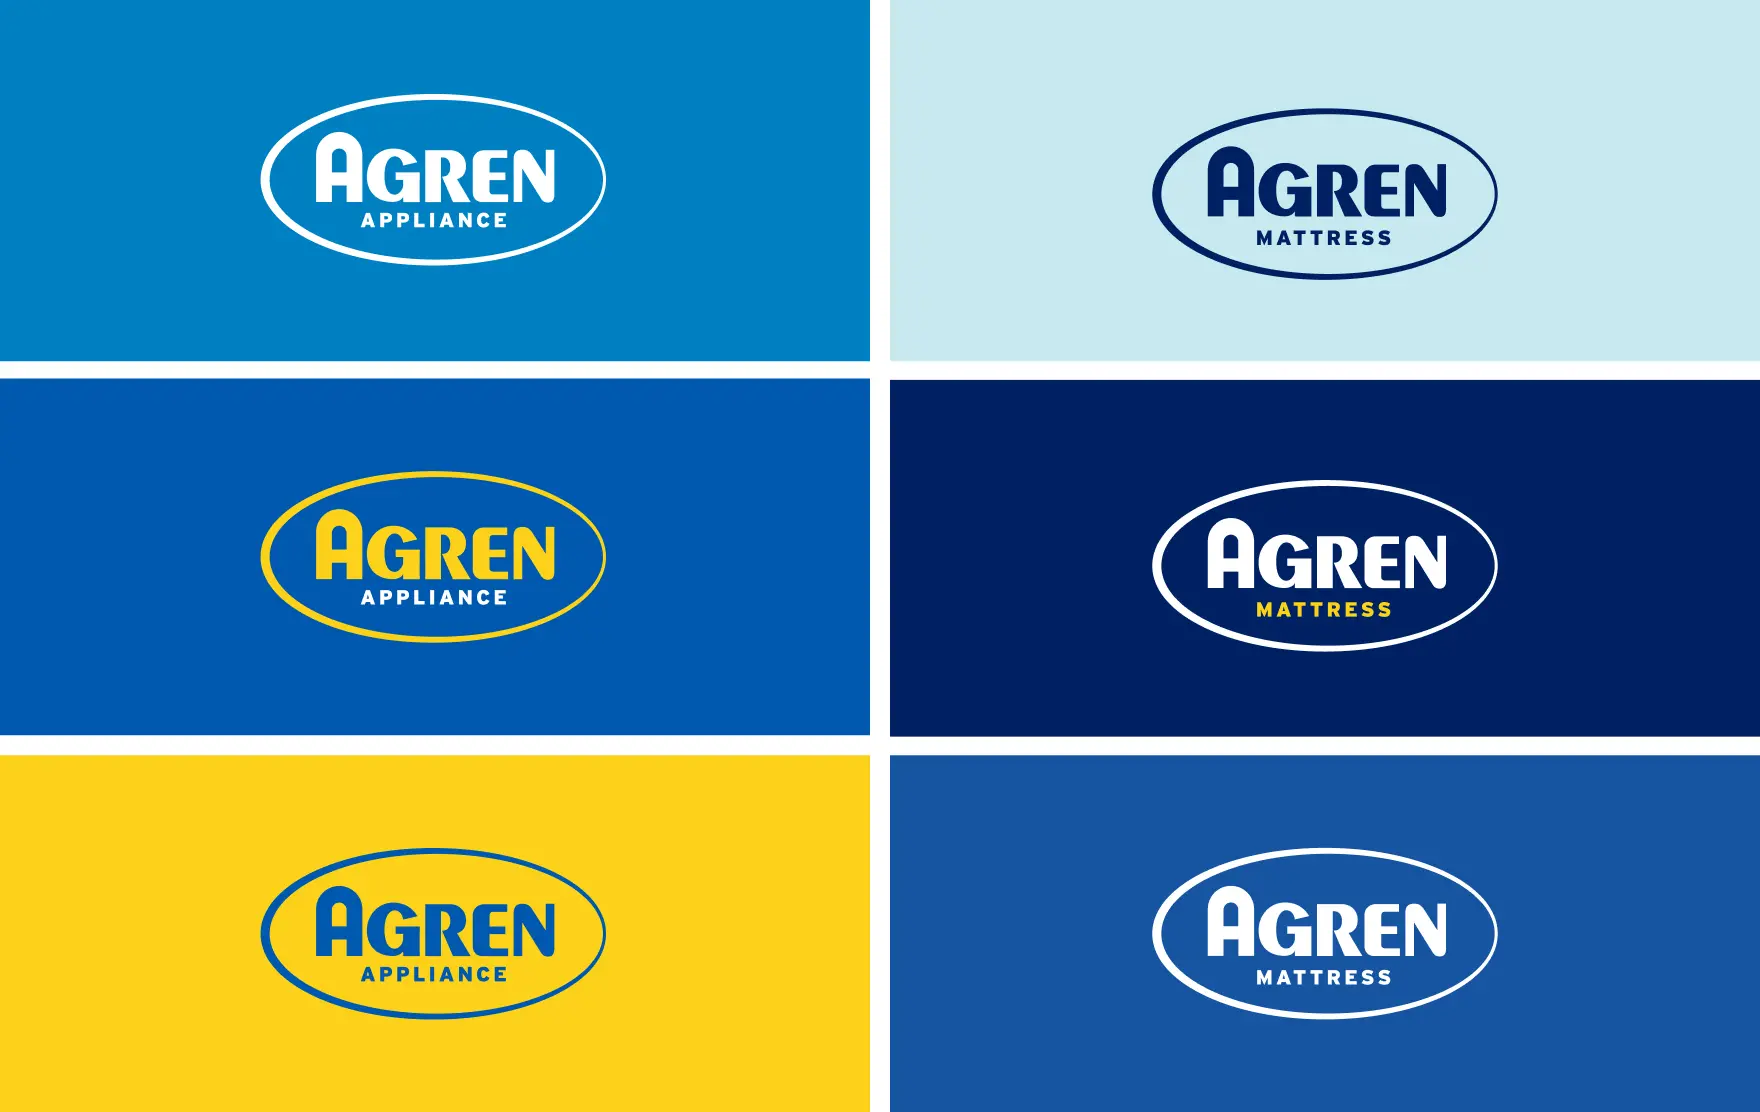 Agren logo variations